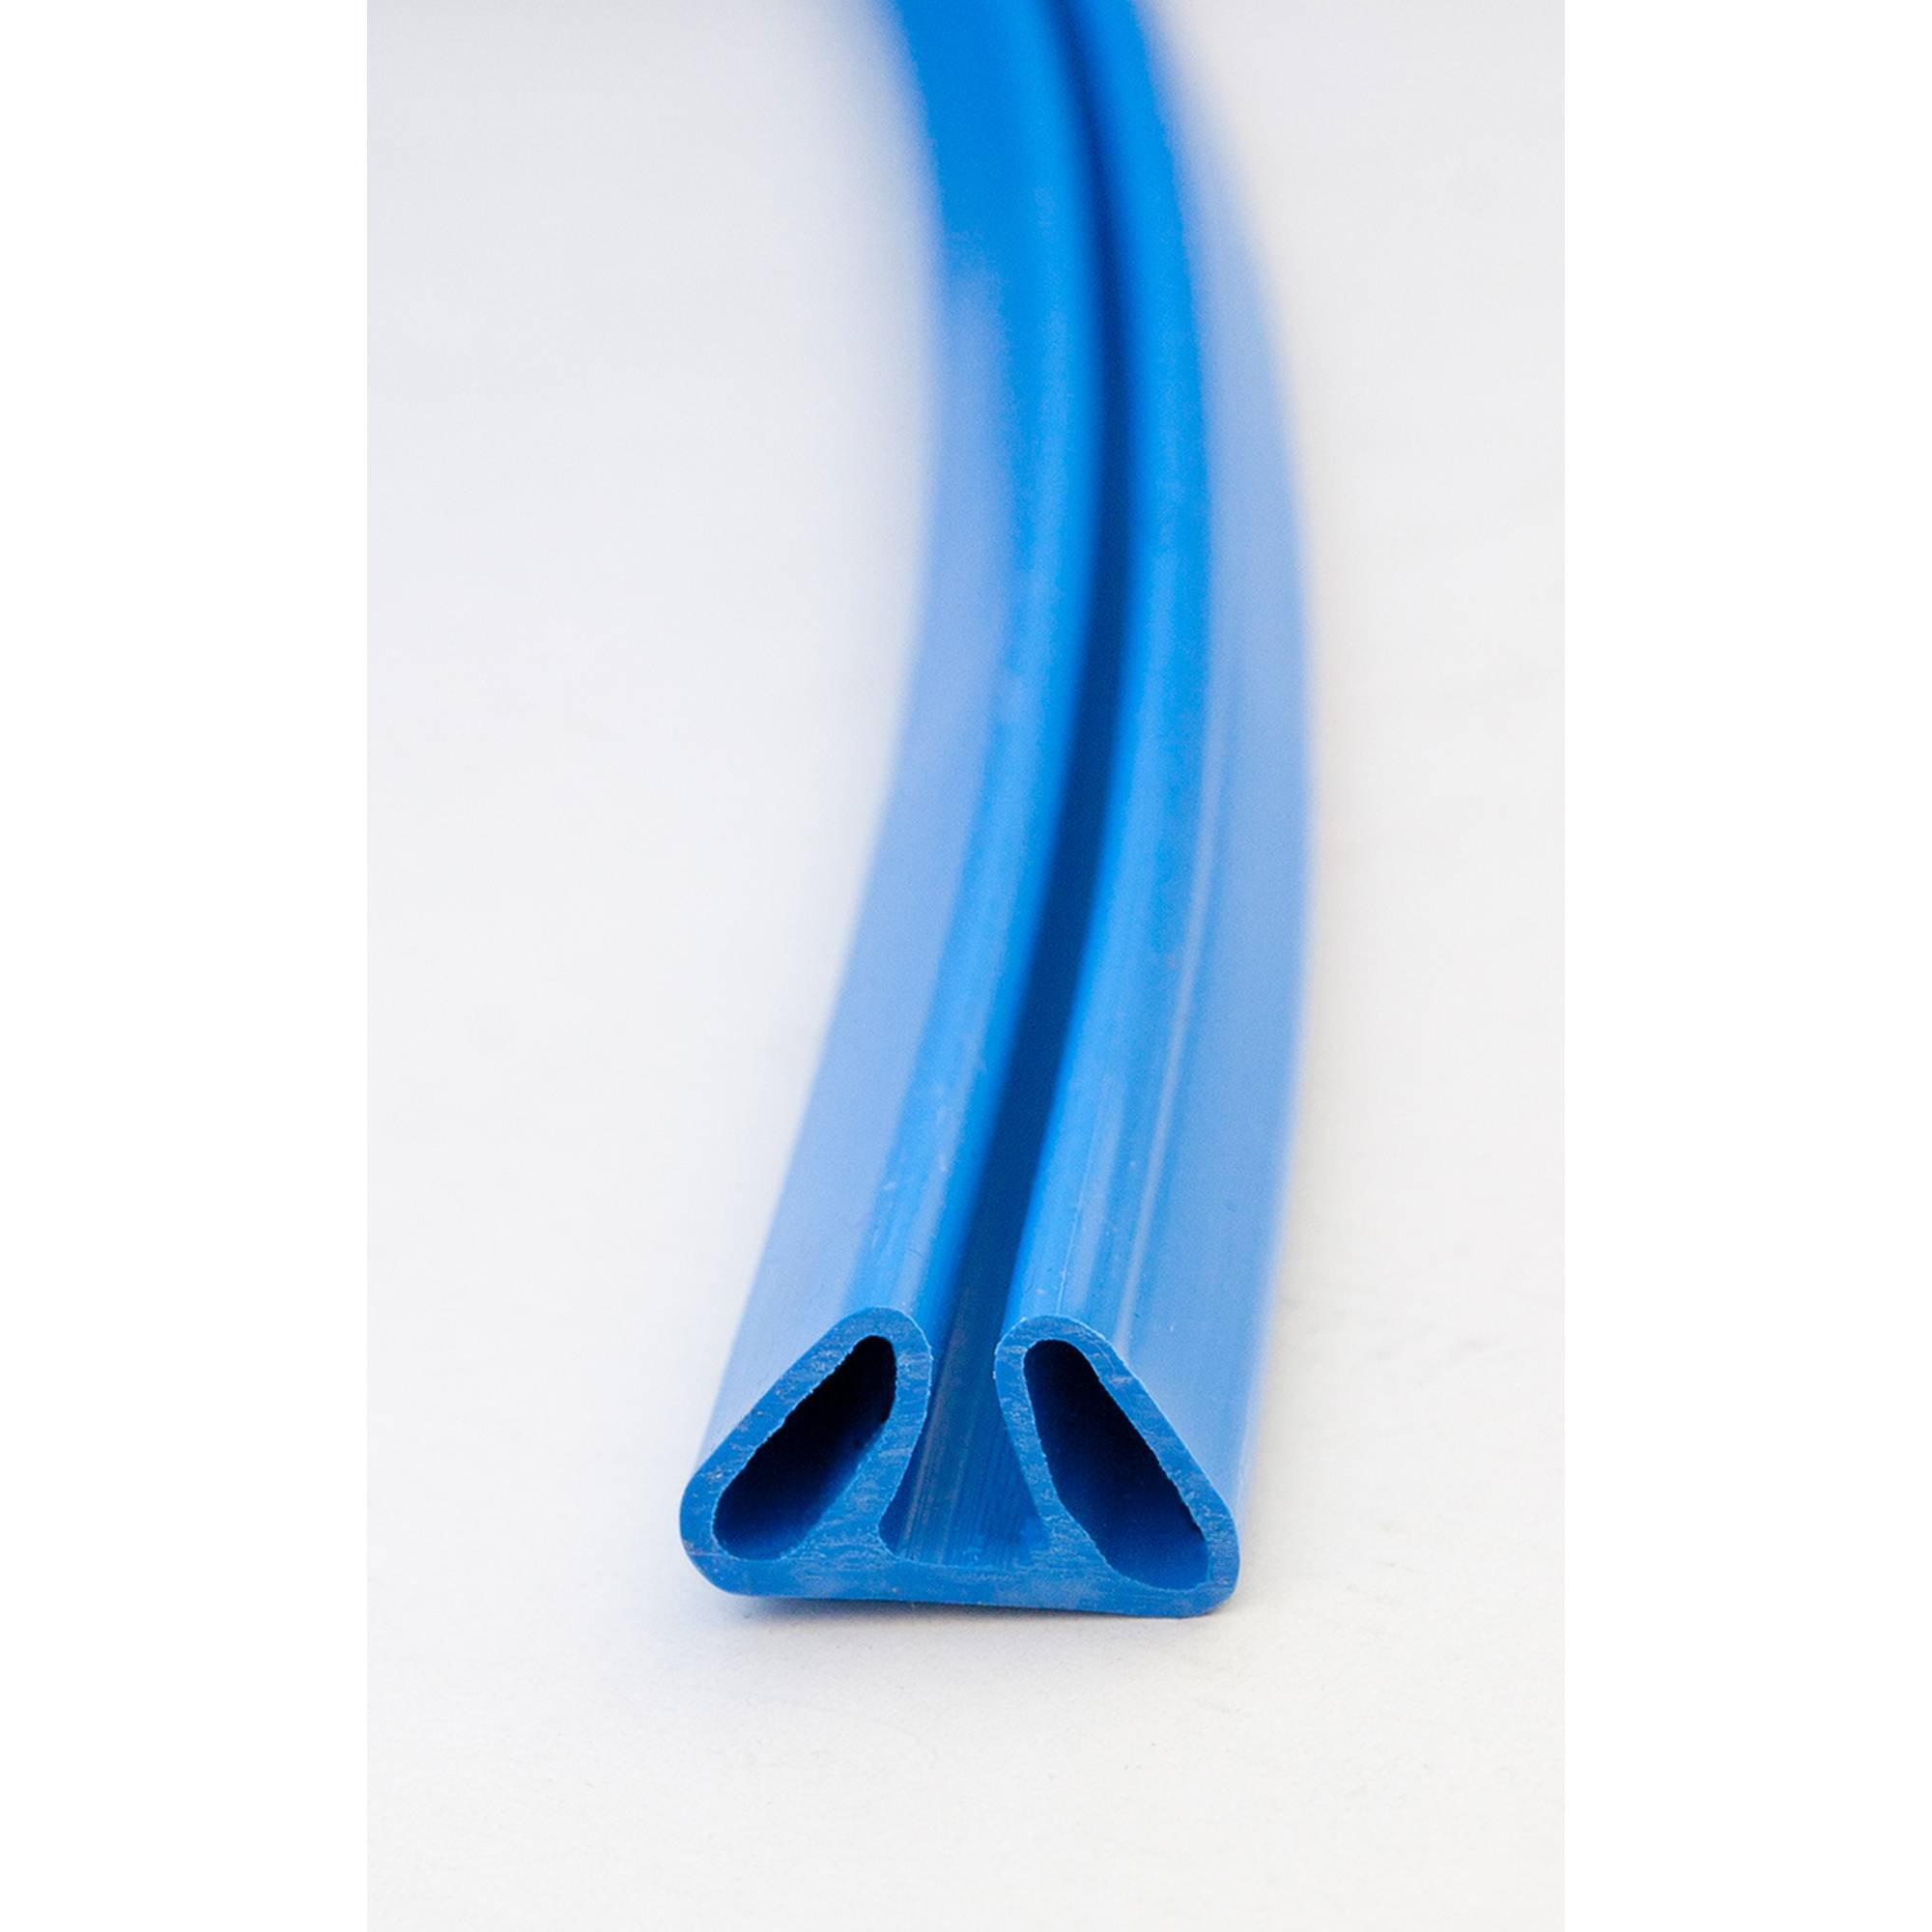 Stahlwandpool oval Exklusiv 800x420x120 cm, Stahl 0,6 mm weiß, Folie 0,6 mm blau, Einhängebiese